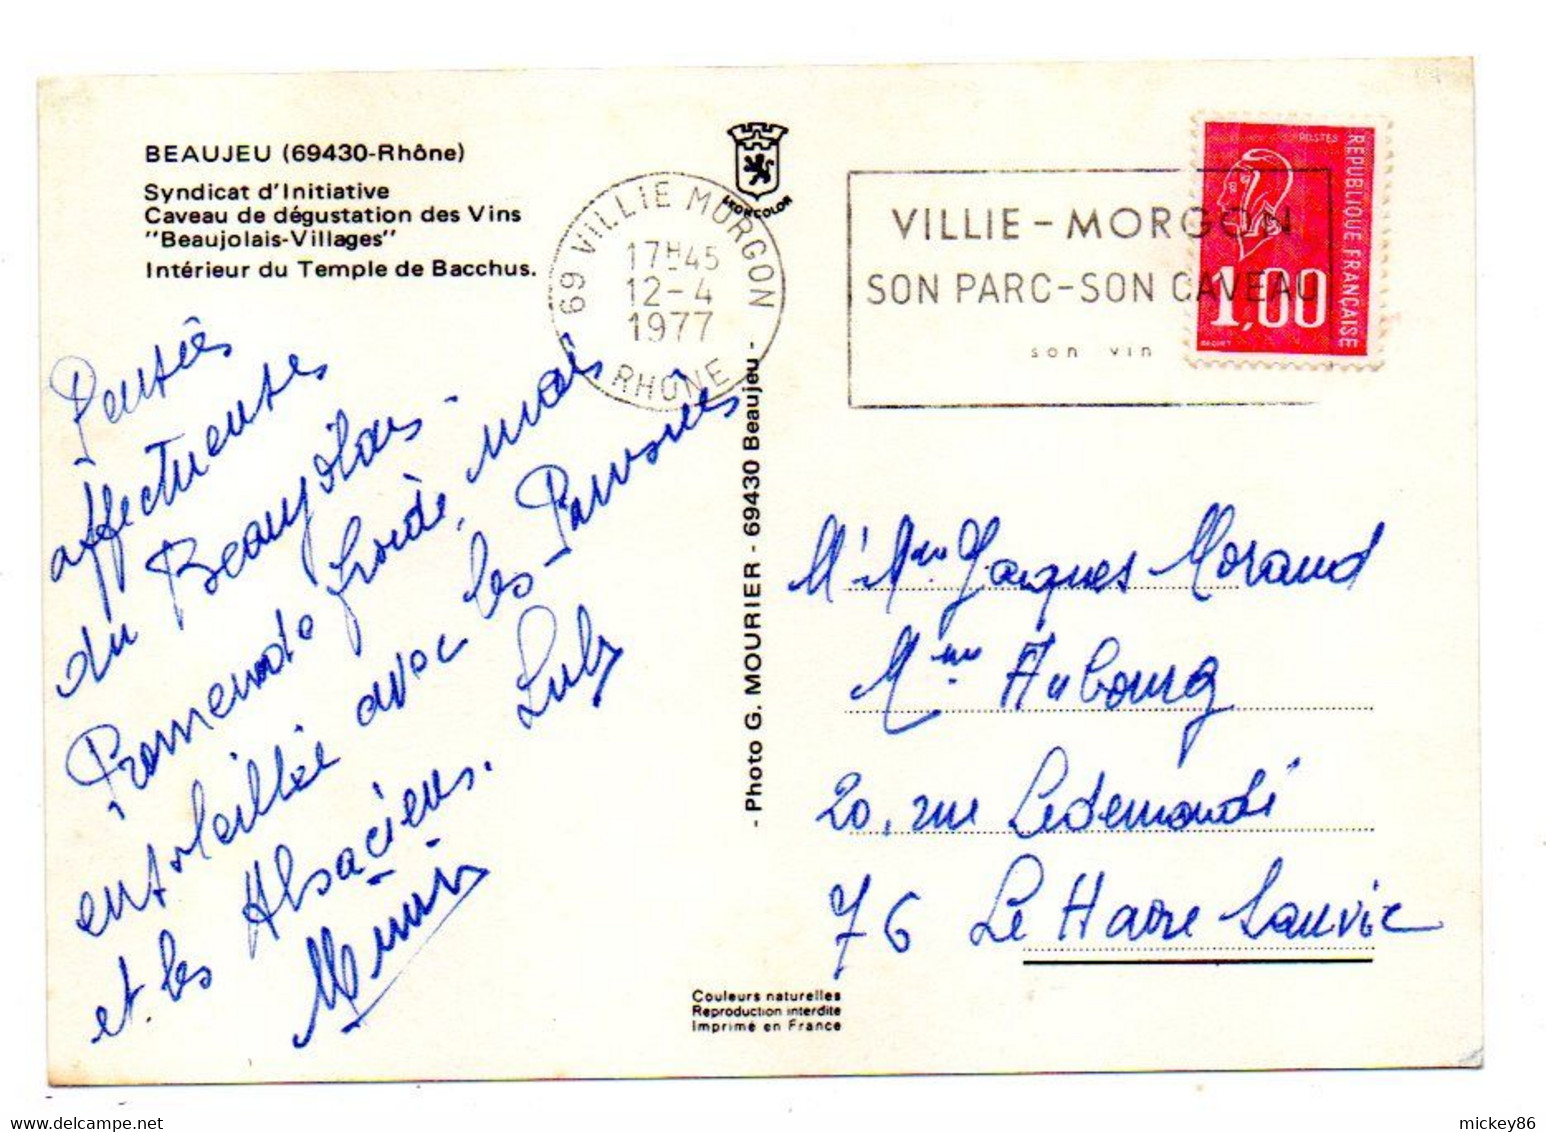 BEAUJEU -- 1977 -- Syndicat D'initiative--Caveau De Dégustation (beaujolais)...cachet  VILLIE-MORGON--69 ..à  Saisir - Beaujeu